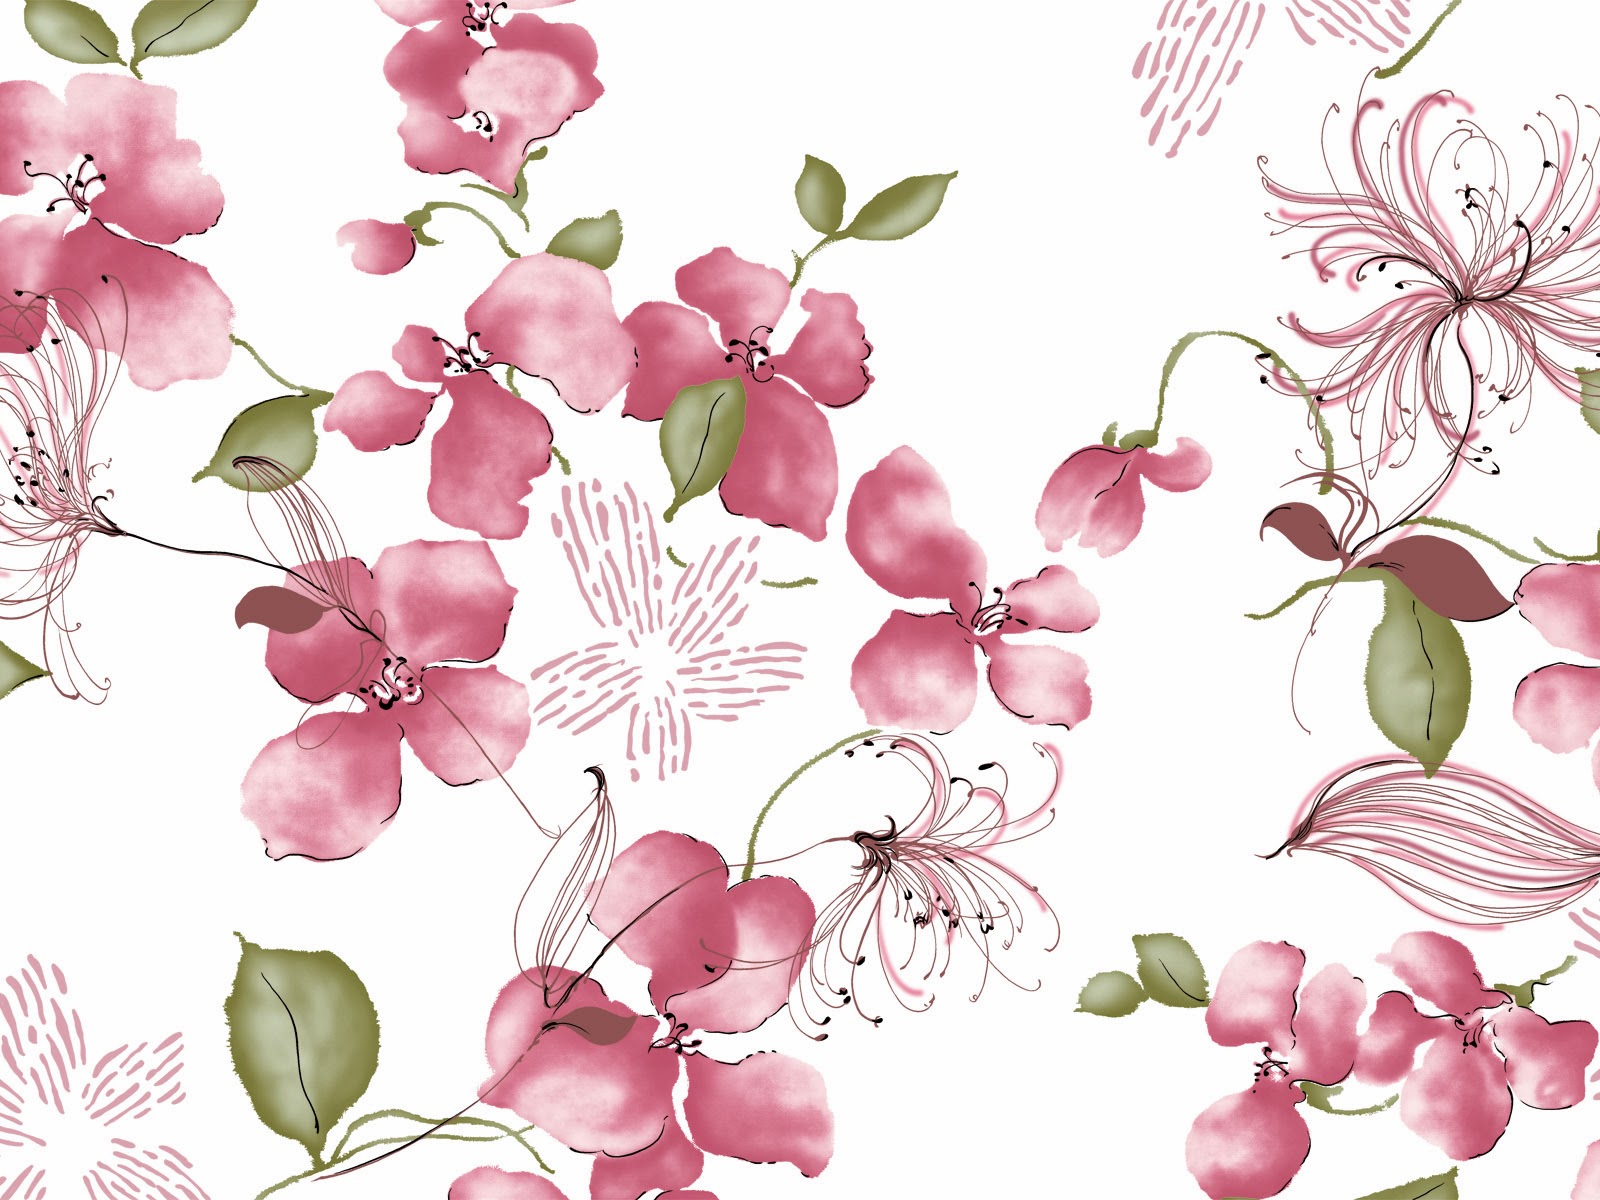  vintage flower wallpaper and make this vintage flower wallpaper for